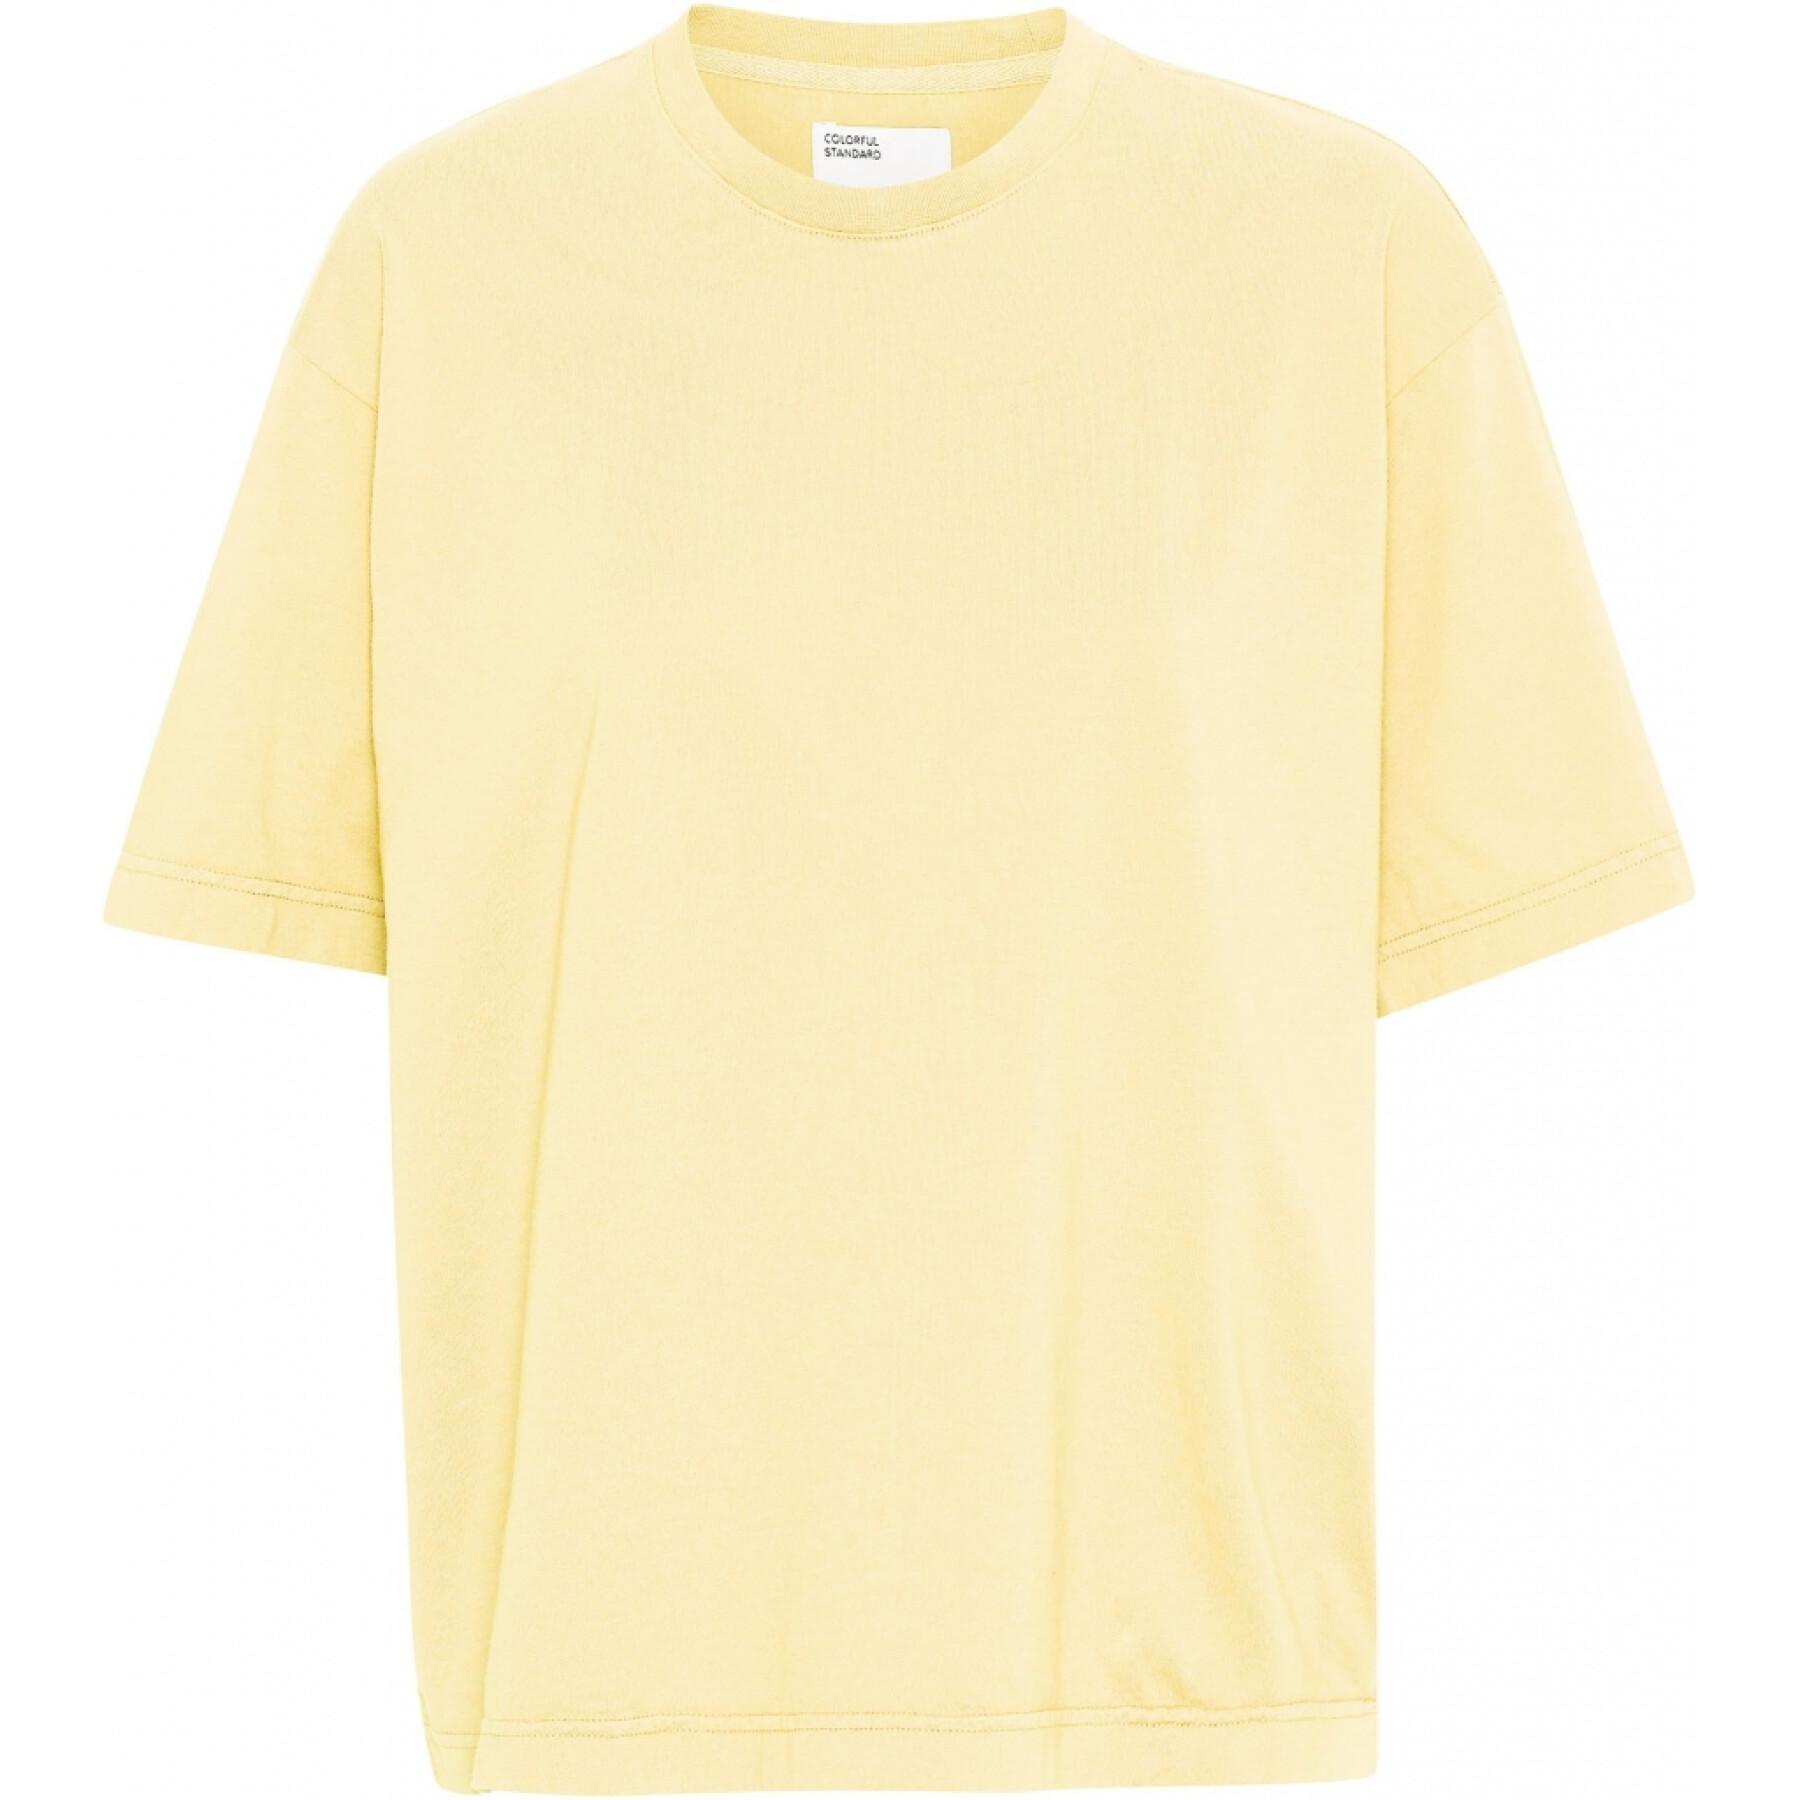 Dames-T-shirt Colorful Standard Organic oversized soft yellow